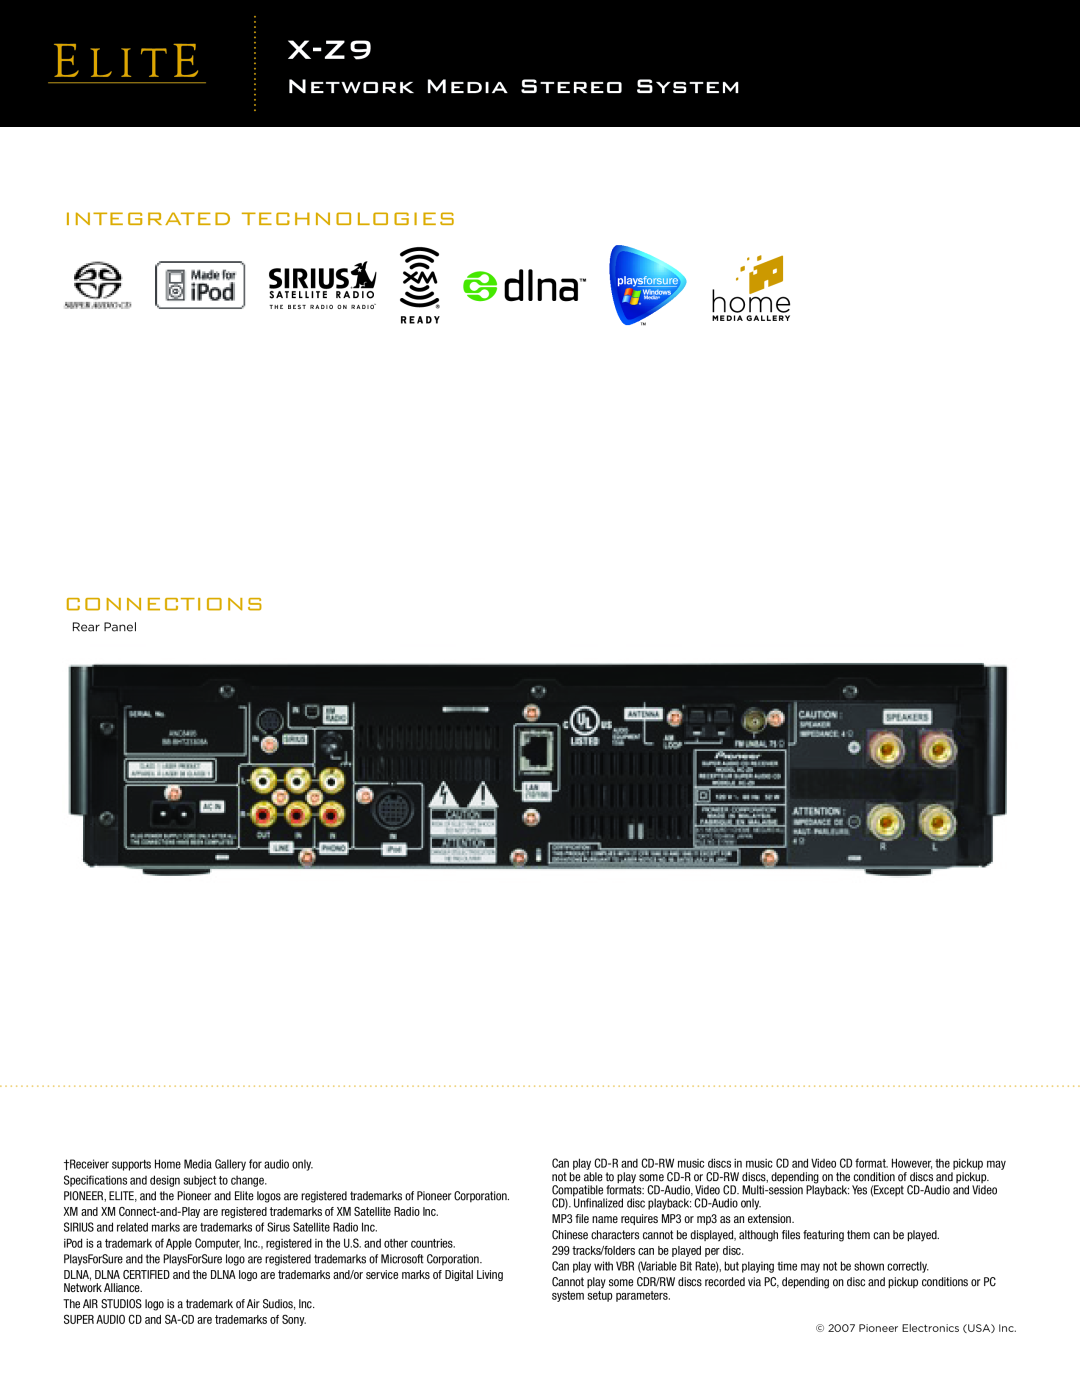 Pioneer X-Z9 manual Integrated Technologies, XDV-Z9-58AV, Network Media Stereo System, Connections 